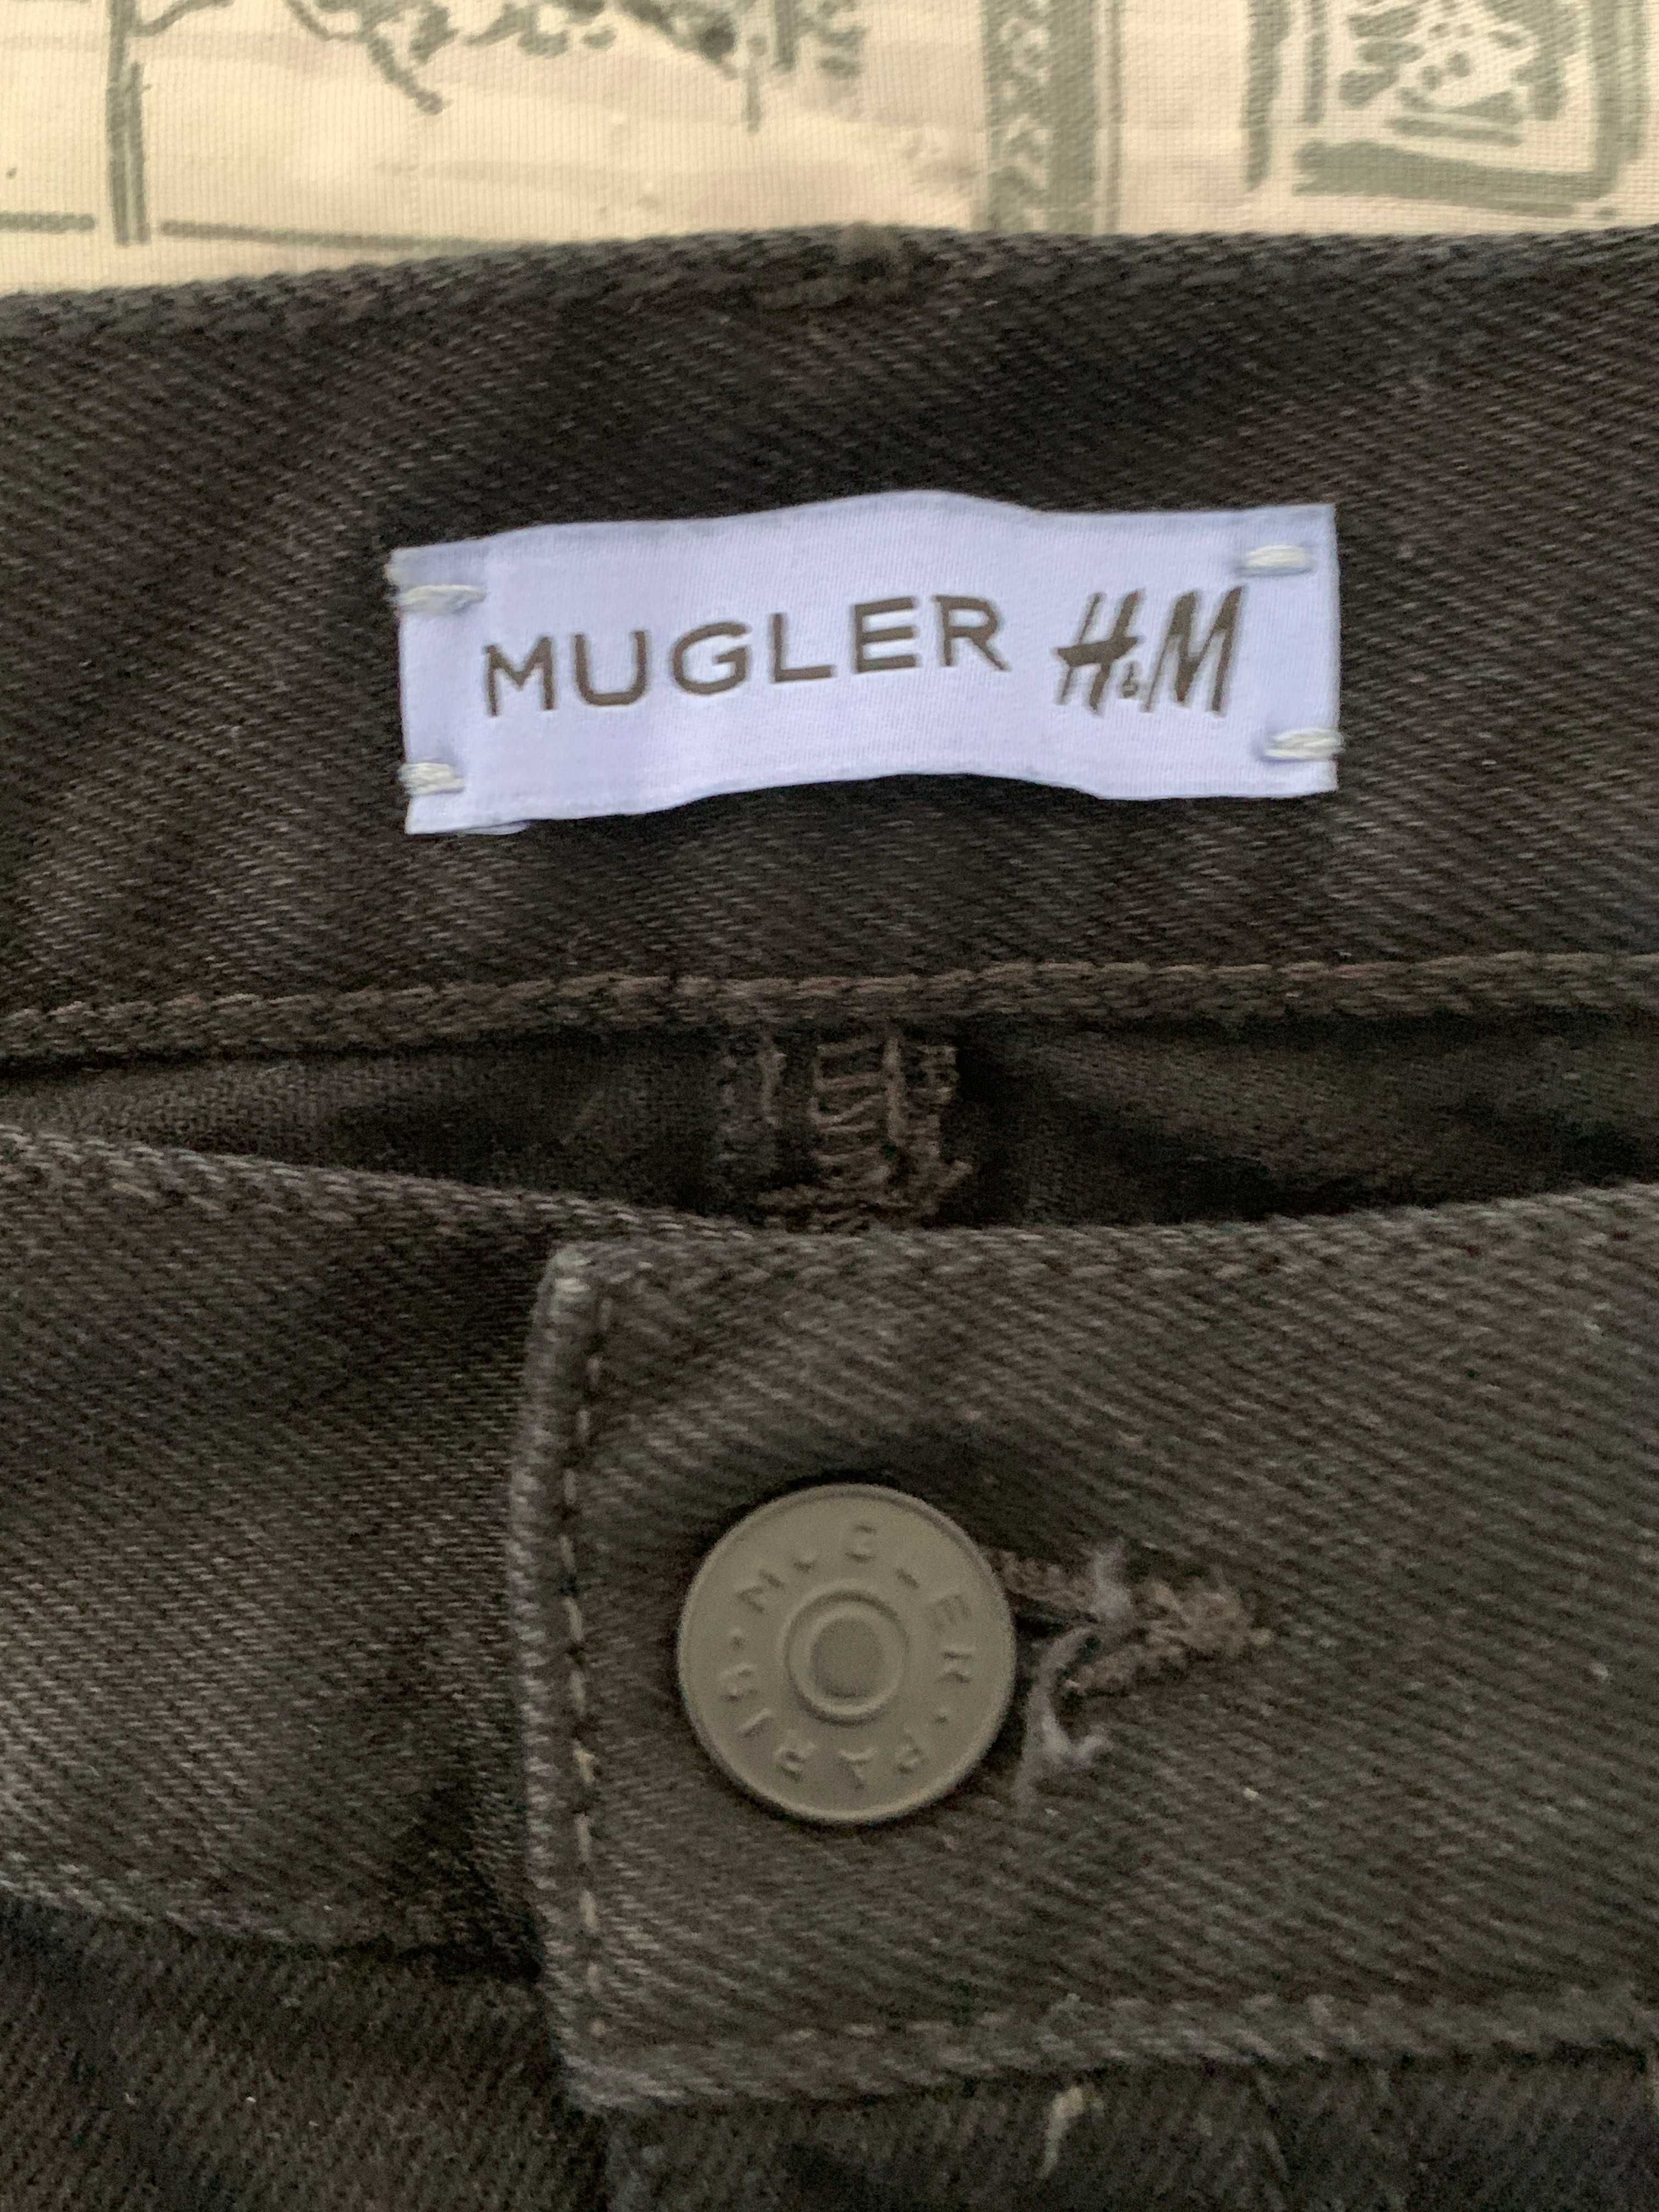 Mugler H&M Spiral-Panel Jeans (Mens)